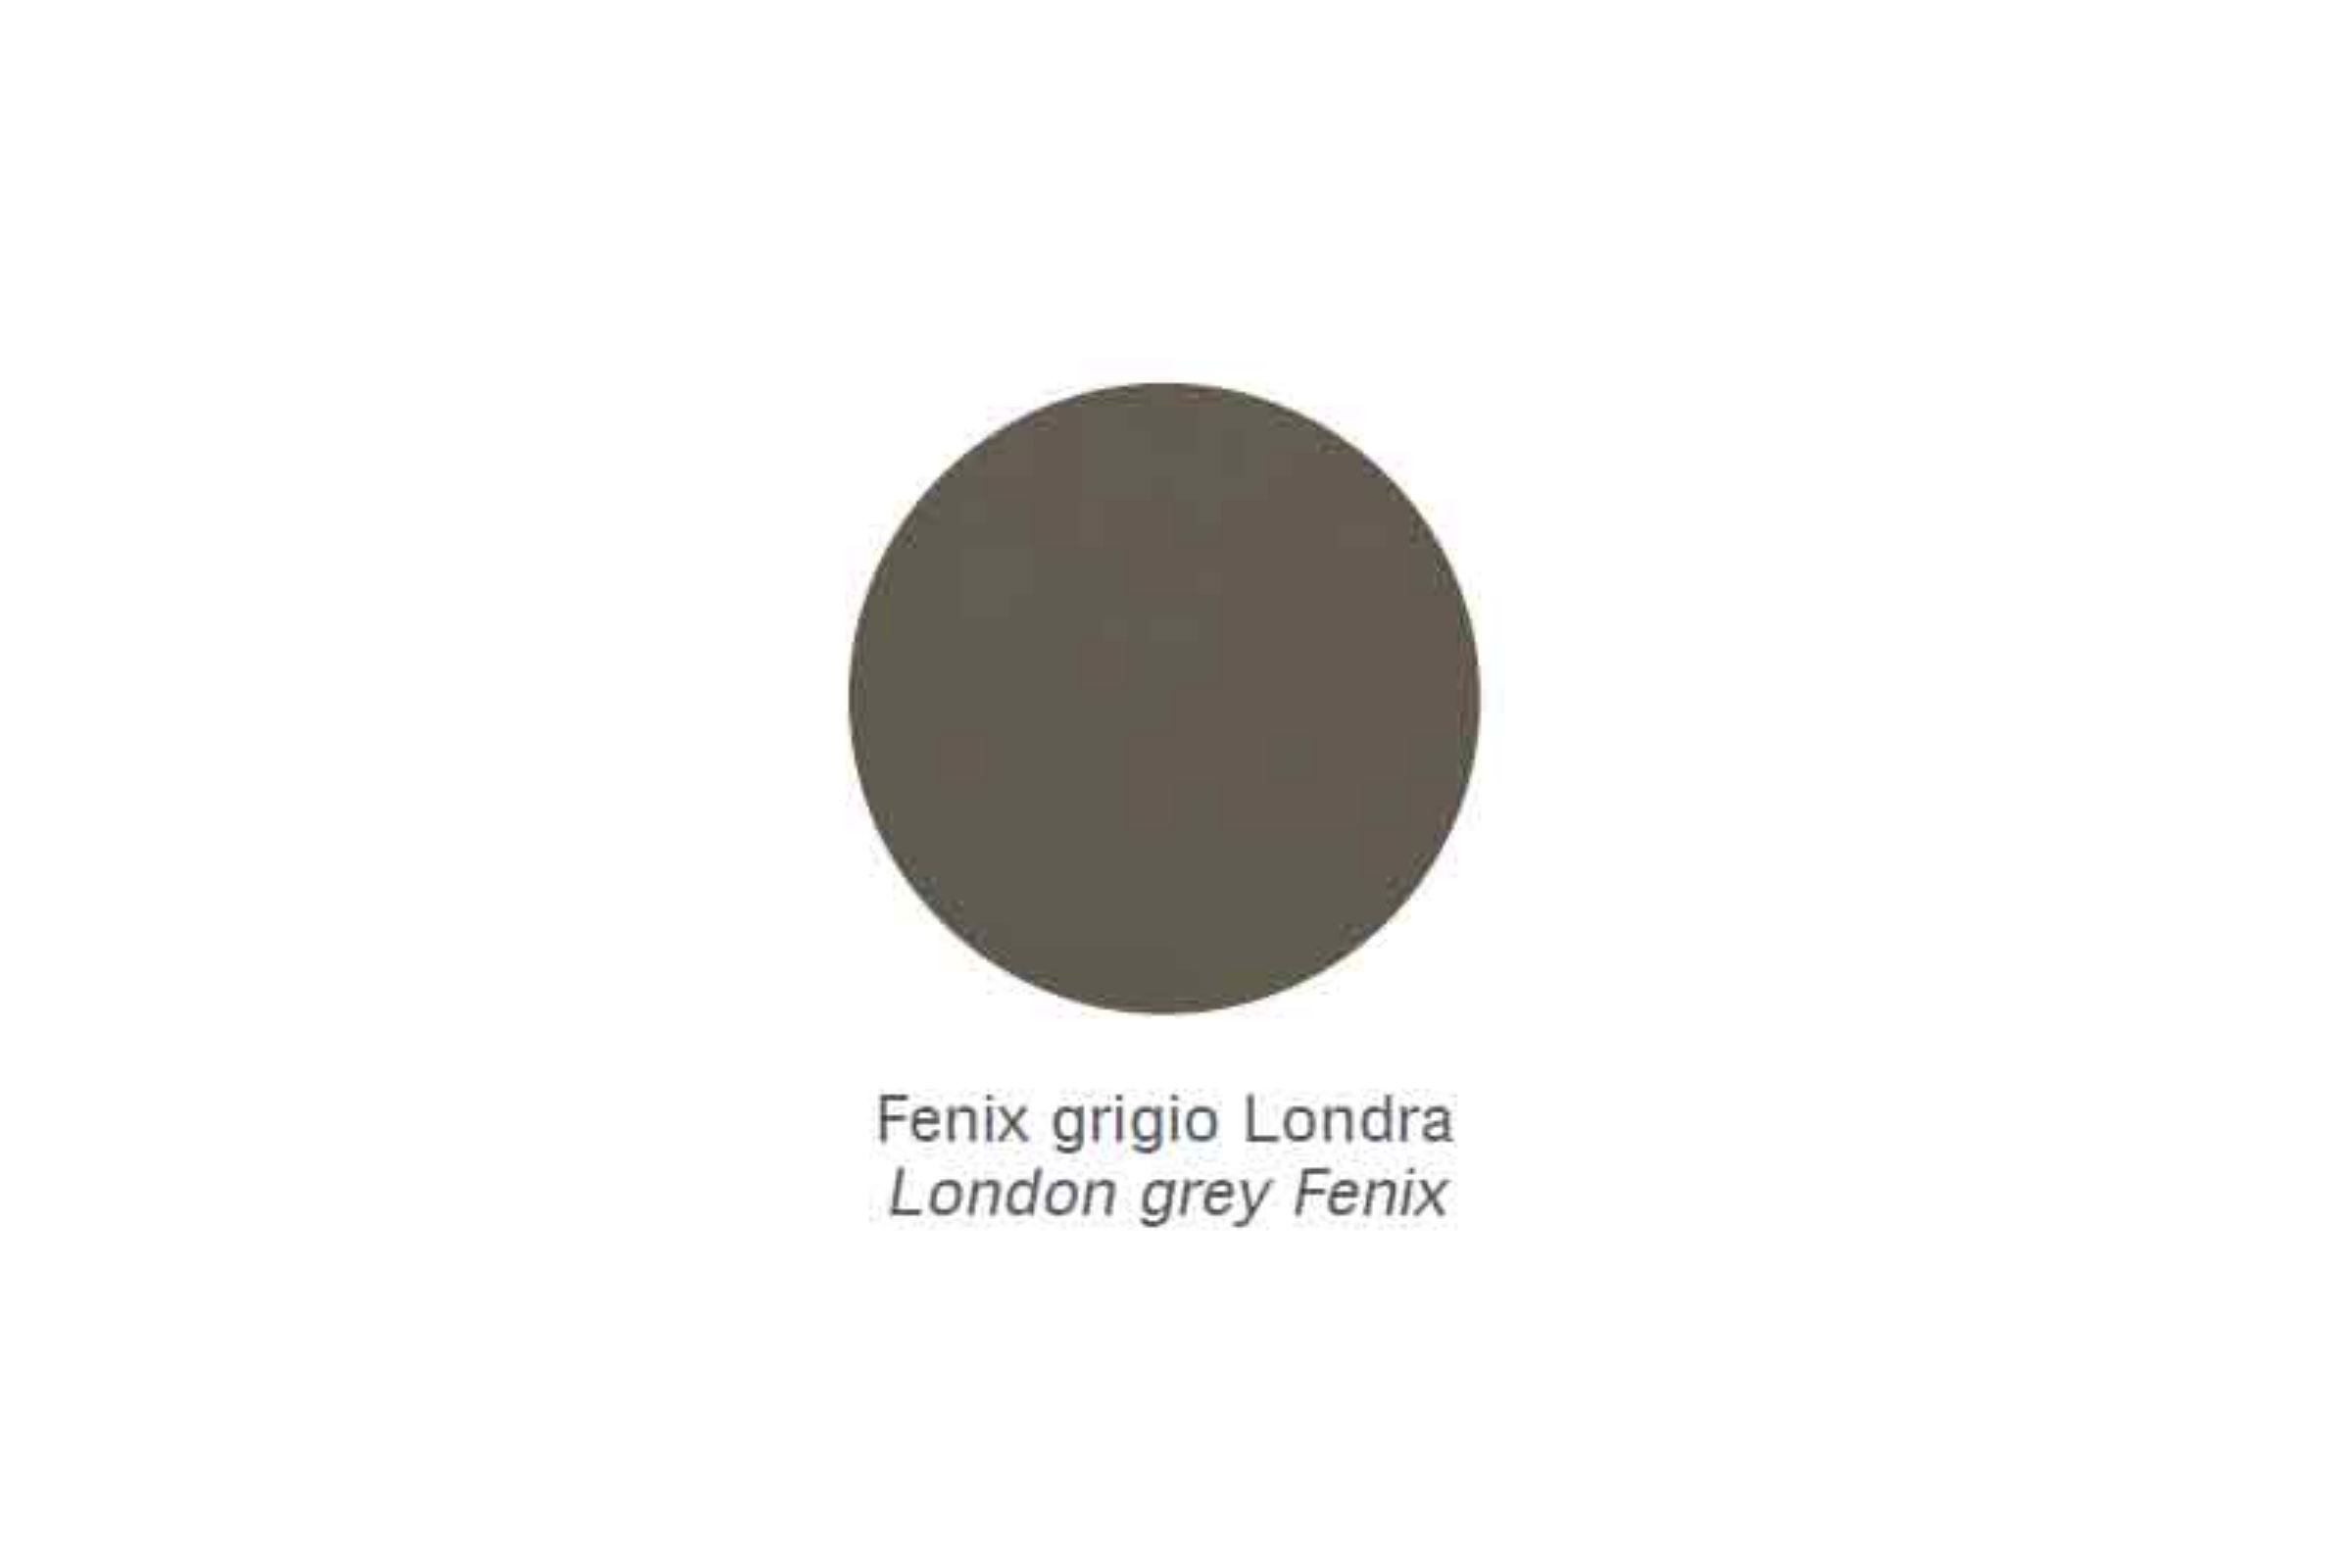 Mensola profonda Zen /45 - Mensola profonda Zen /45 Fenix grigio Londra